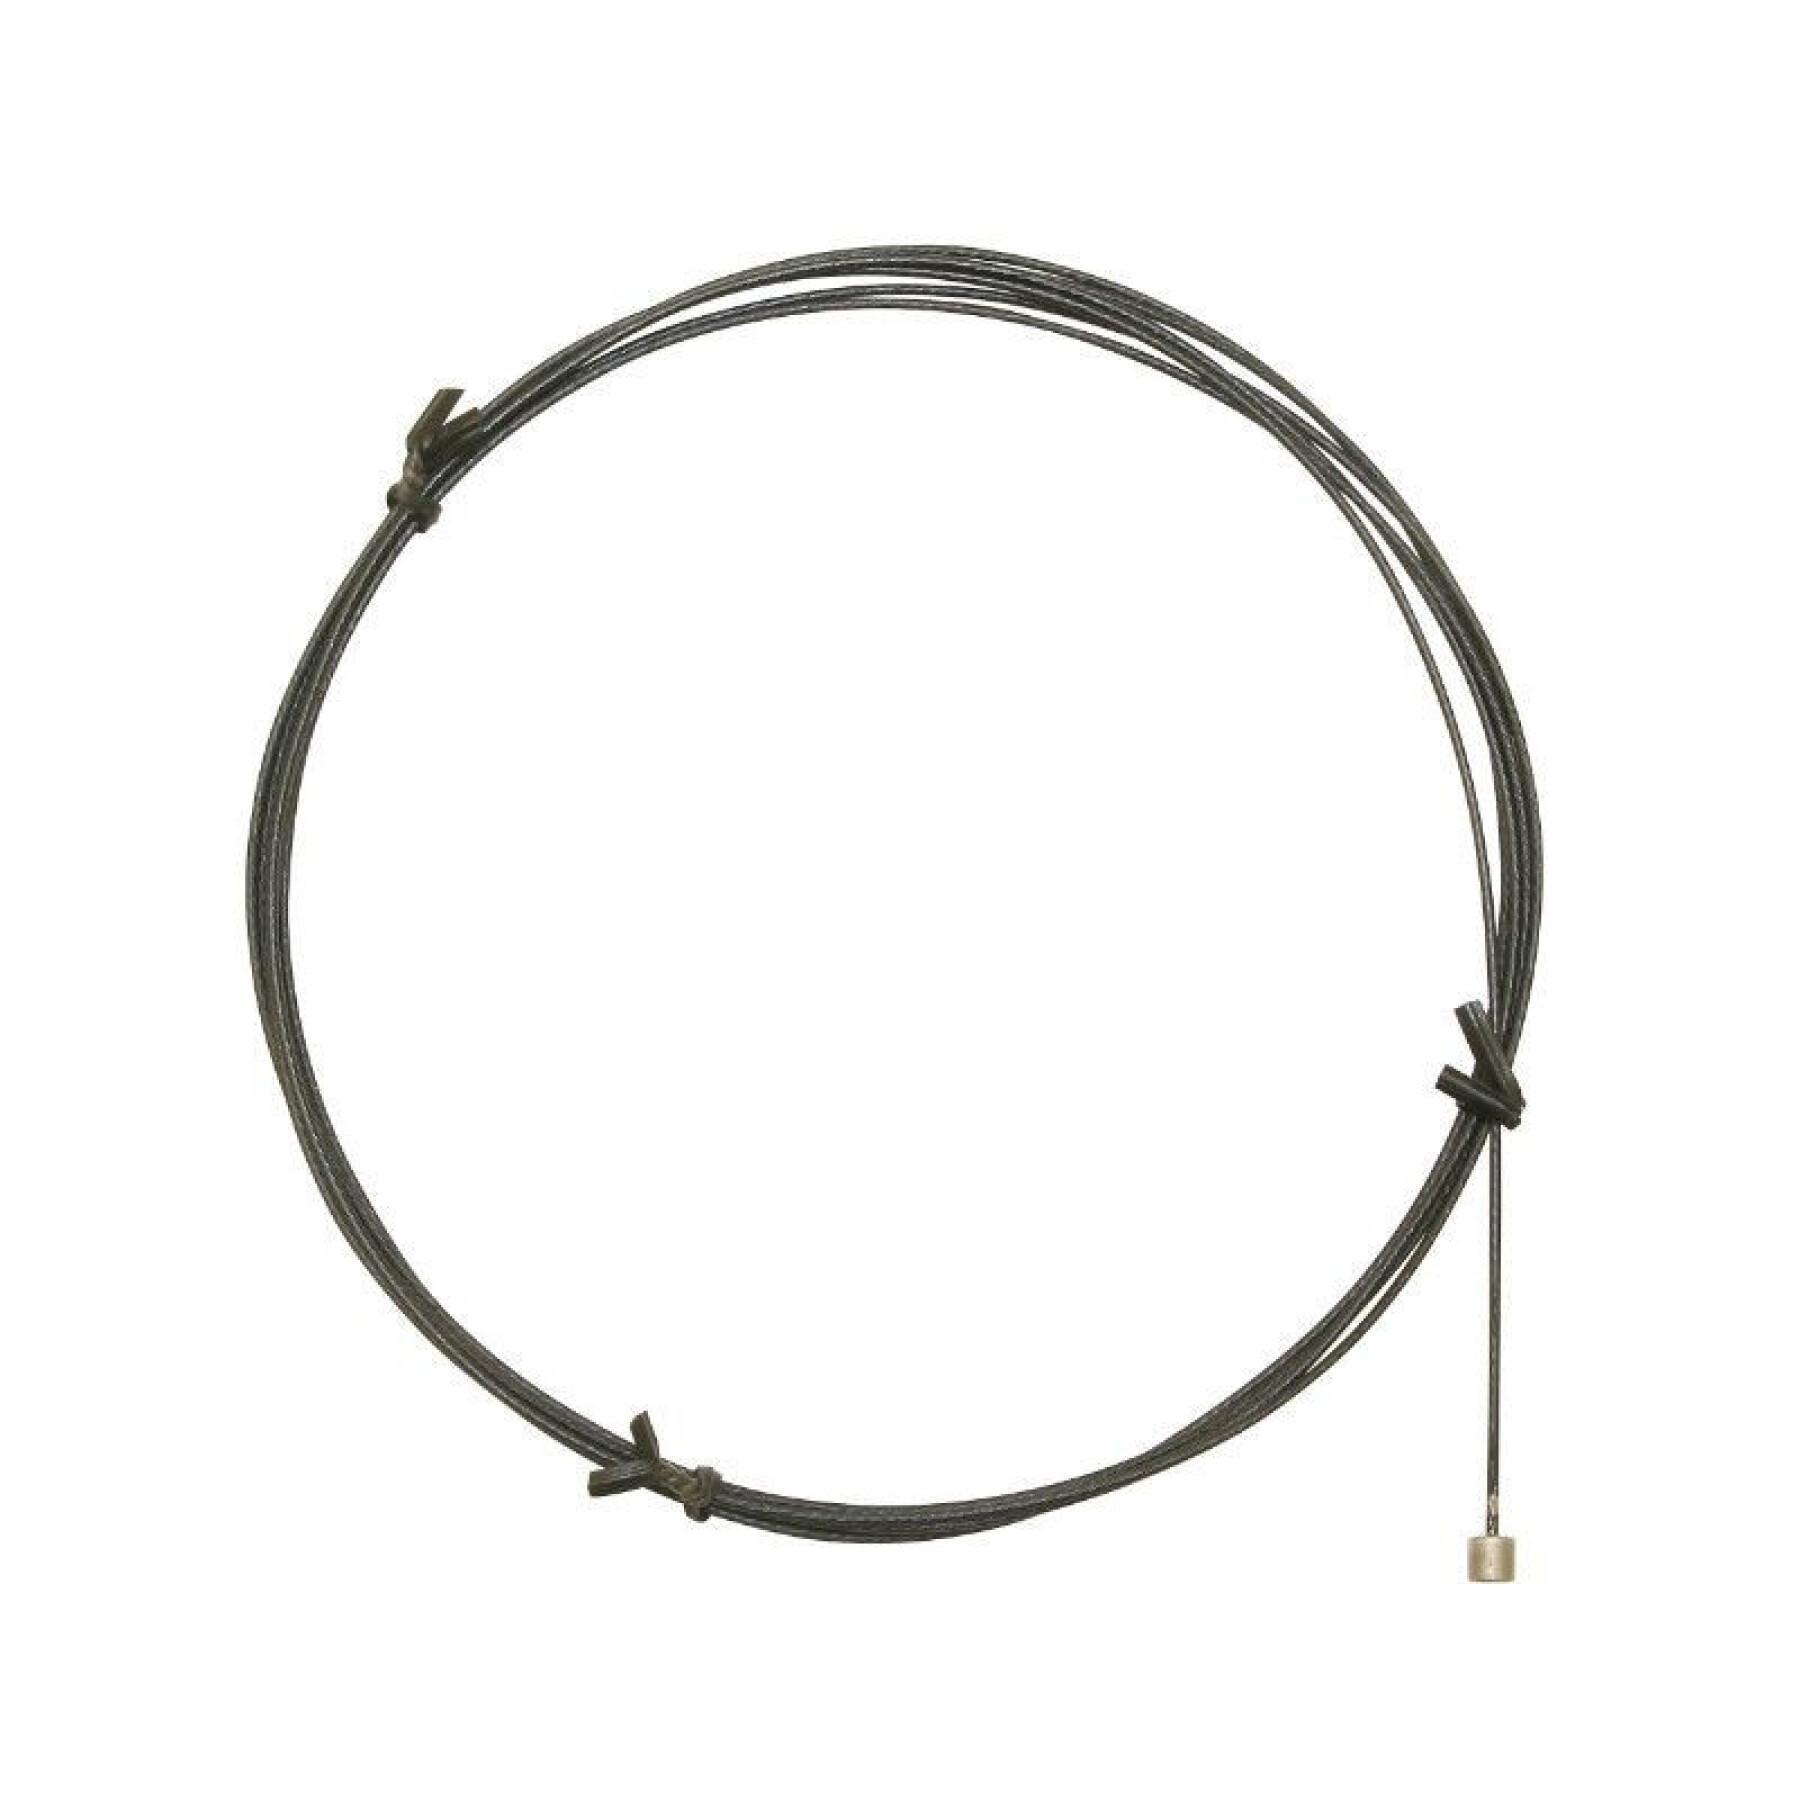 Cable de desviador de acero inoxidable adaptable a la reacción de teflón P2R Shimano